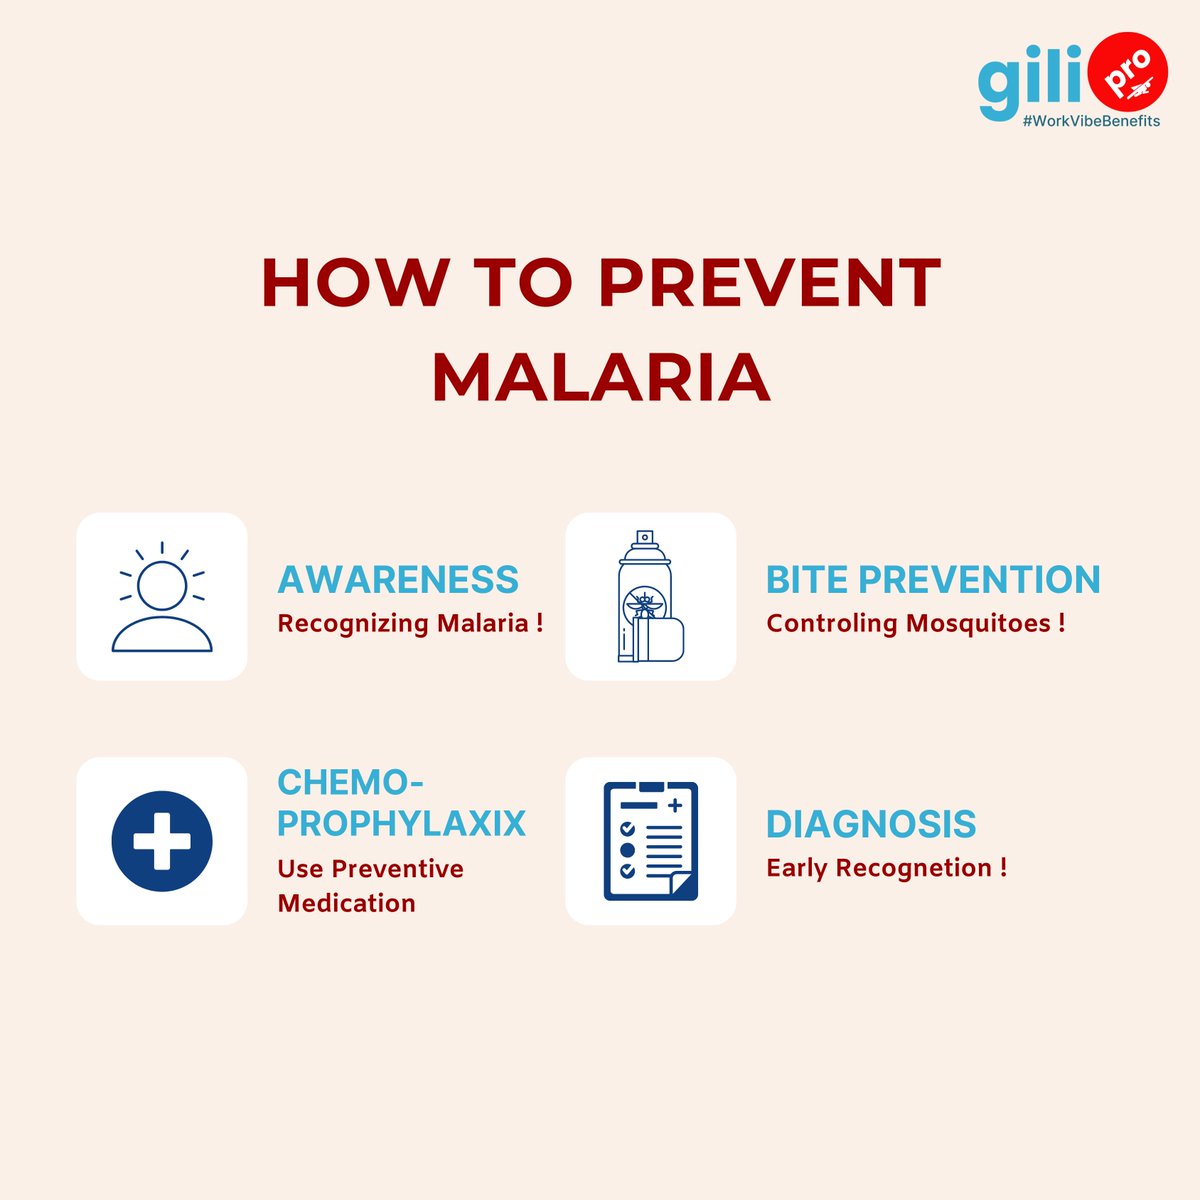 On World Malaria Day and every day, safeguarding health is our priority.

#gilipro #worldmalariaday #malaria #malariaday #healthcare #wellness #employeebenefits #workvibebenefits #health #healthyliving